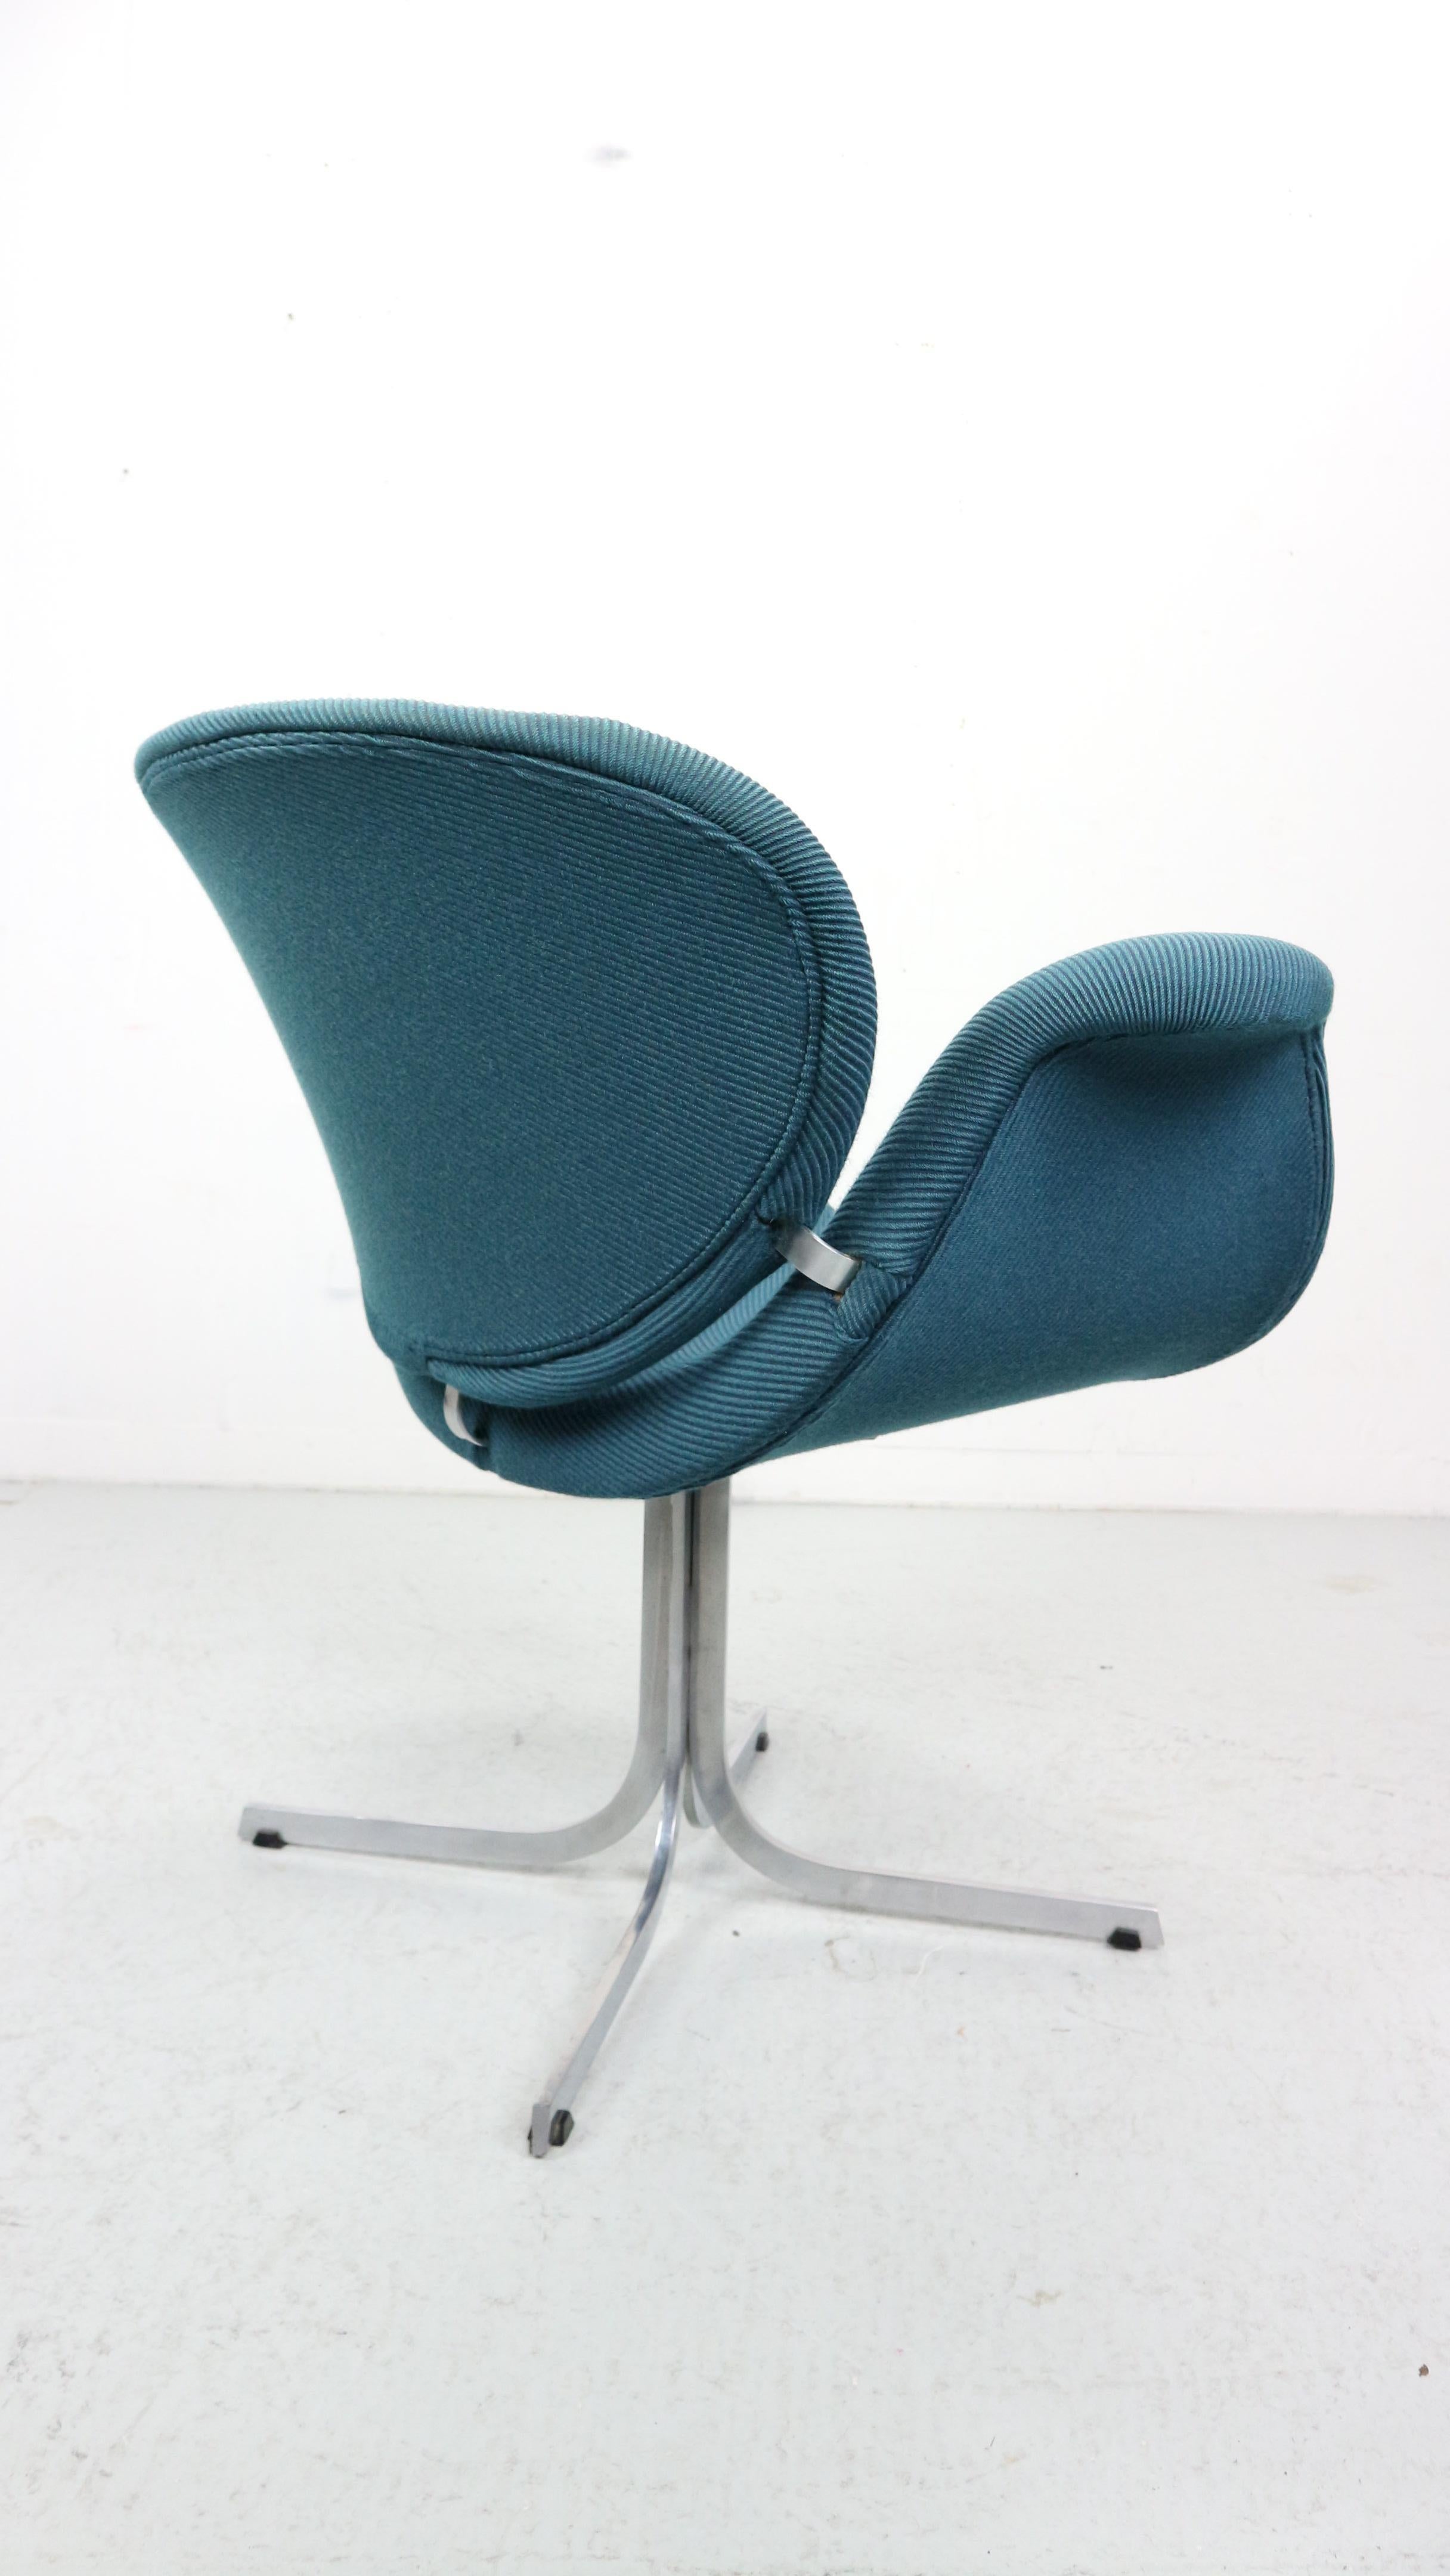 Dutch Vintage Pierre Paulin Tulip midi F549 chair 1960s by Artifort, Netherlands